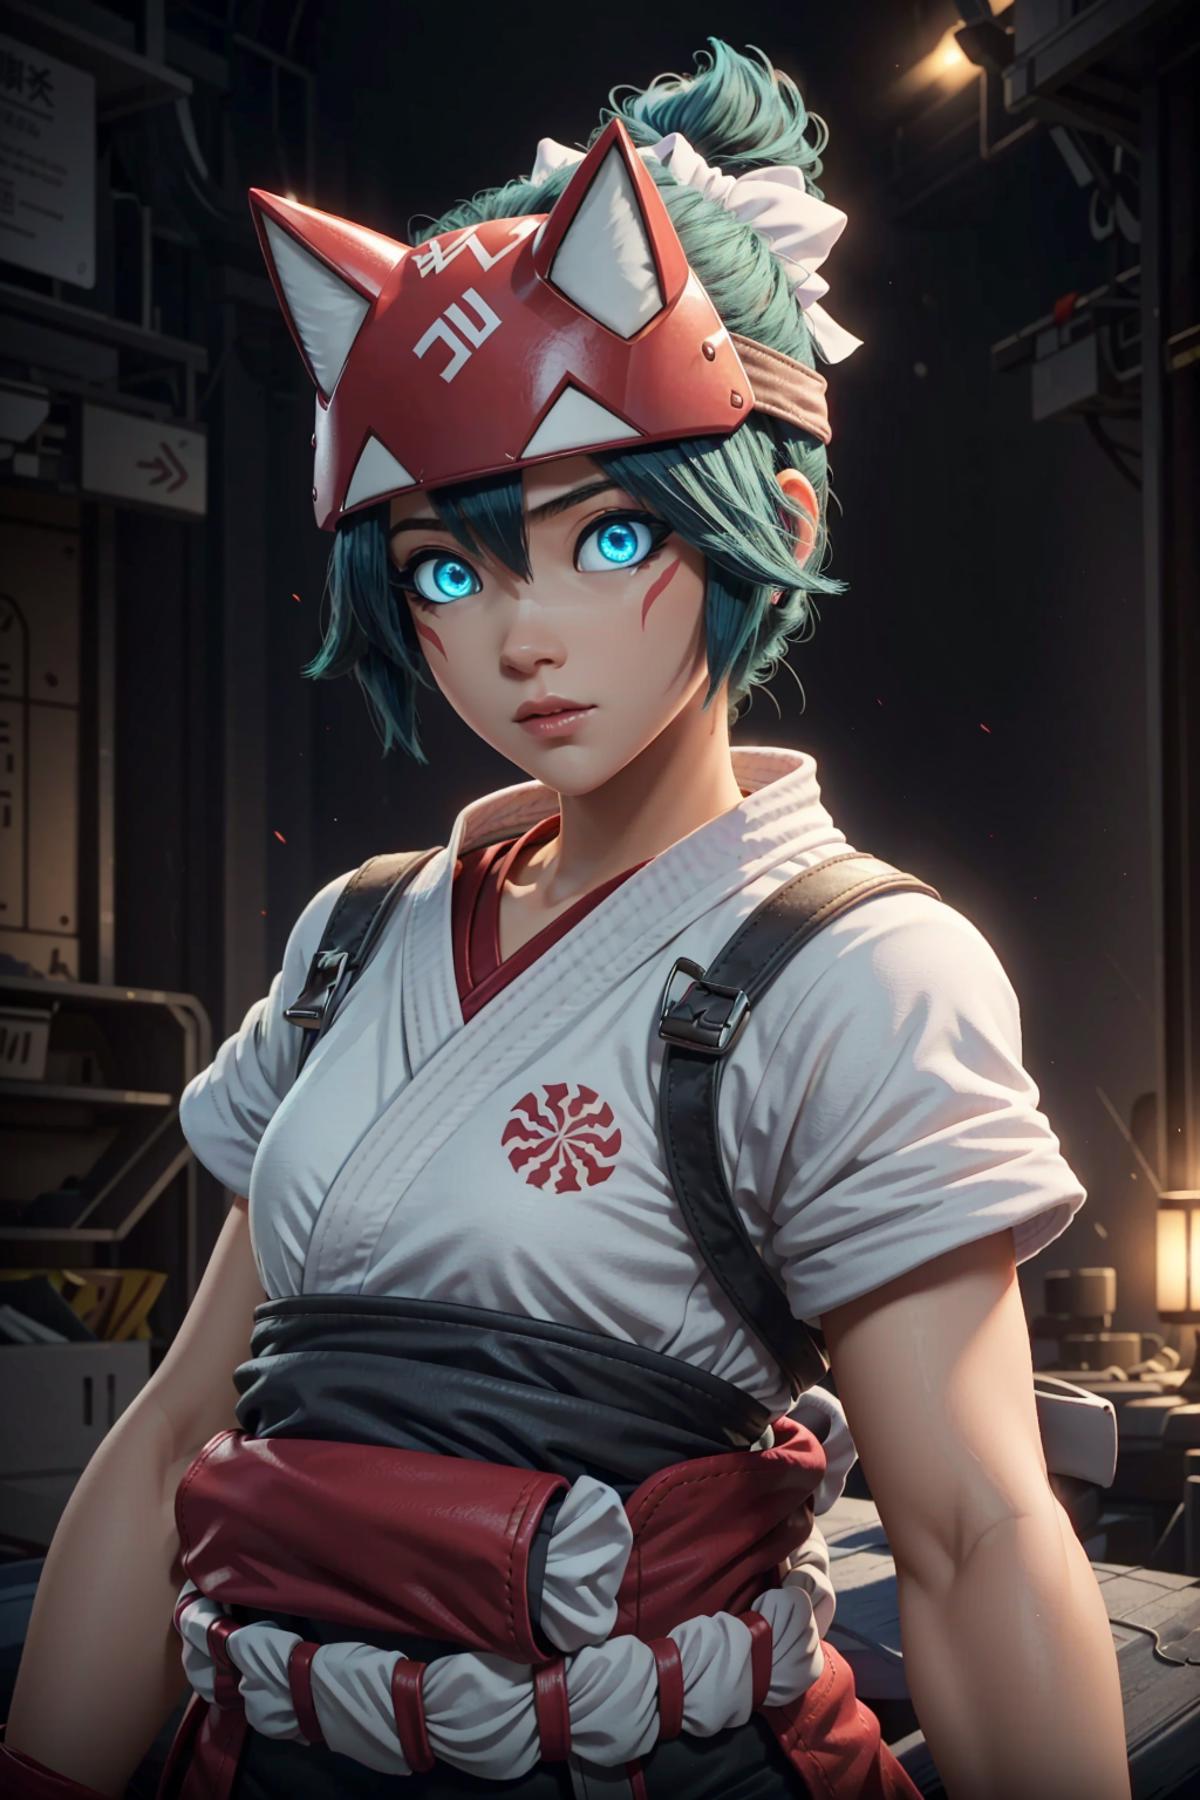 Kiriko from Overwatch image by BloodRedKittie